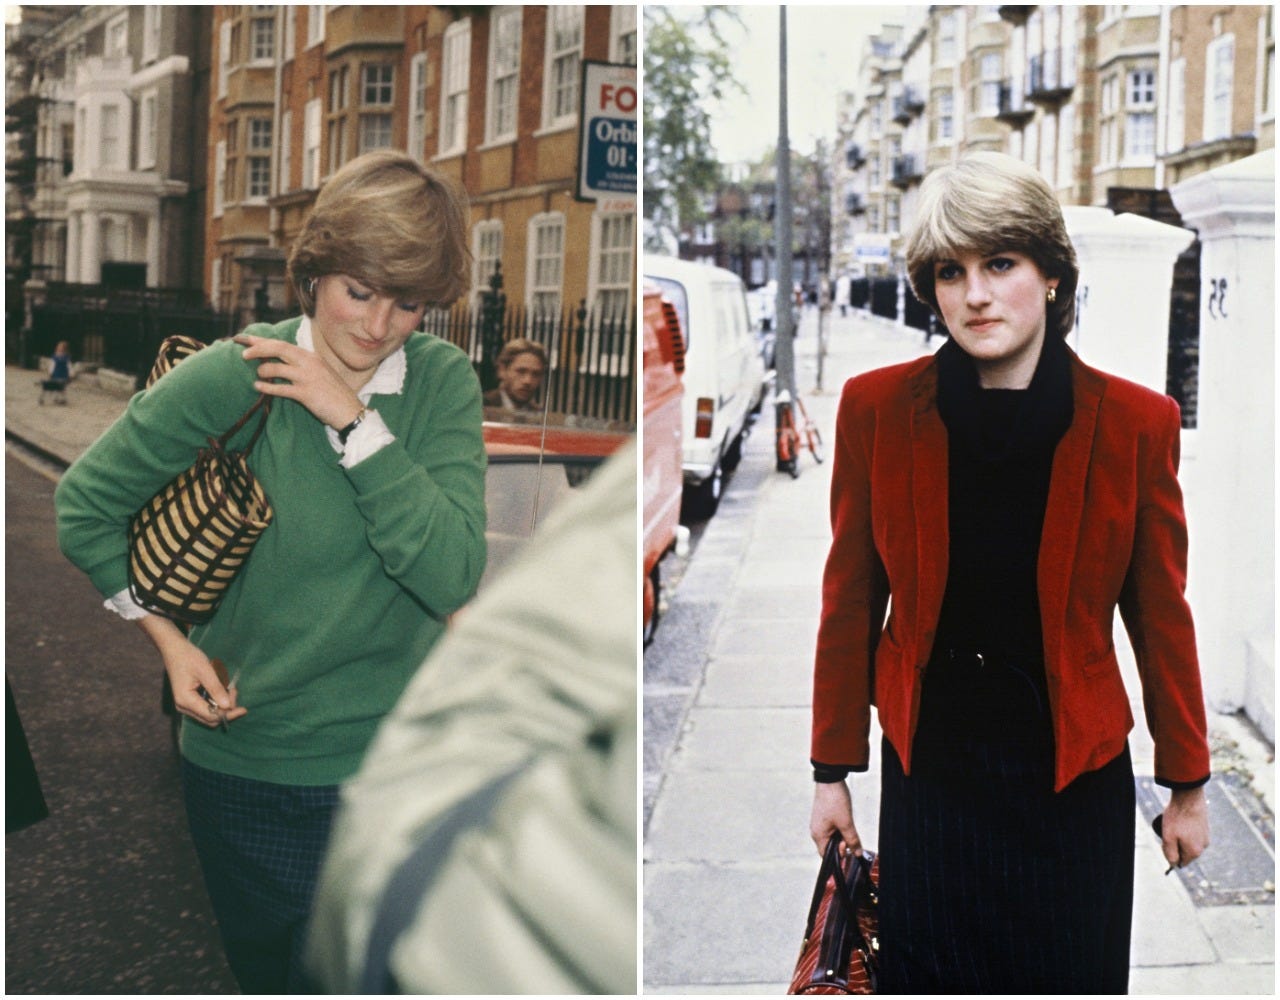 Lady Diana Spencer (1961 - 1997) outside her London flat on Coleherne Court, UK, November 1980.